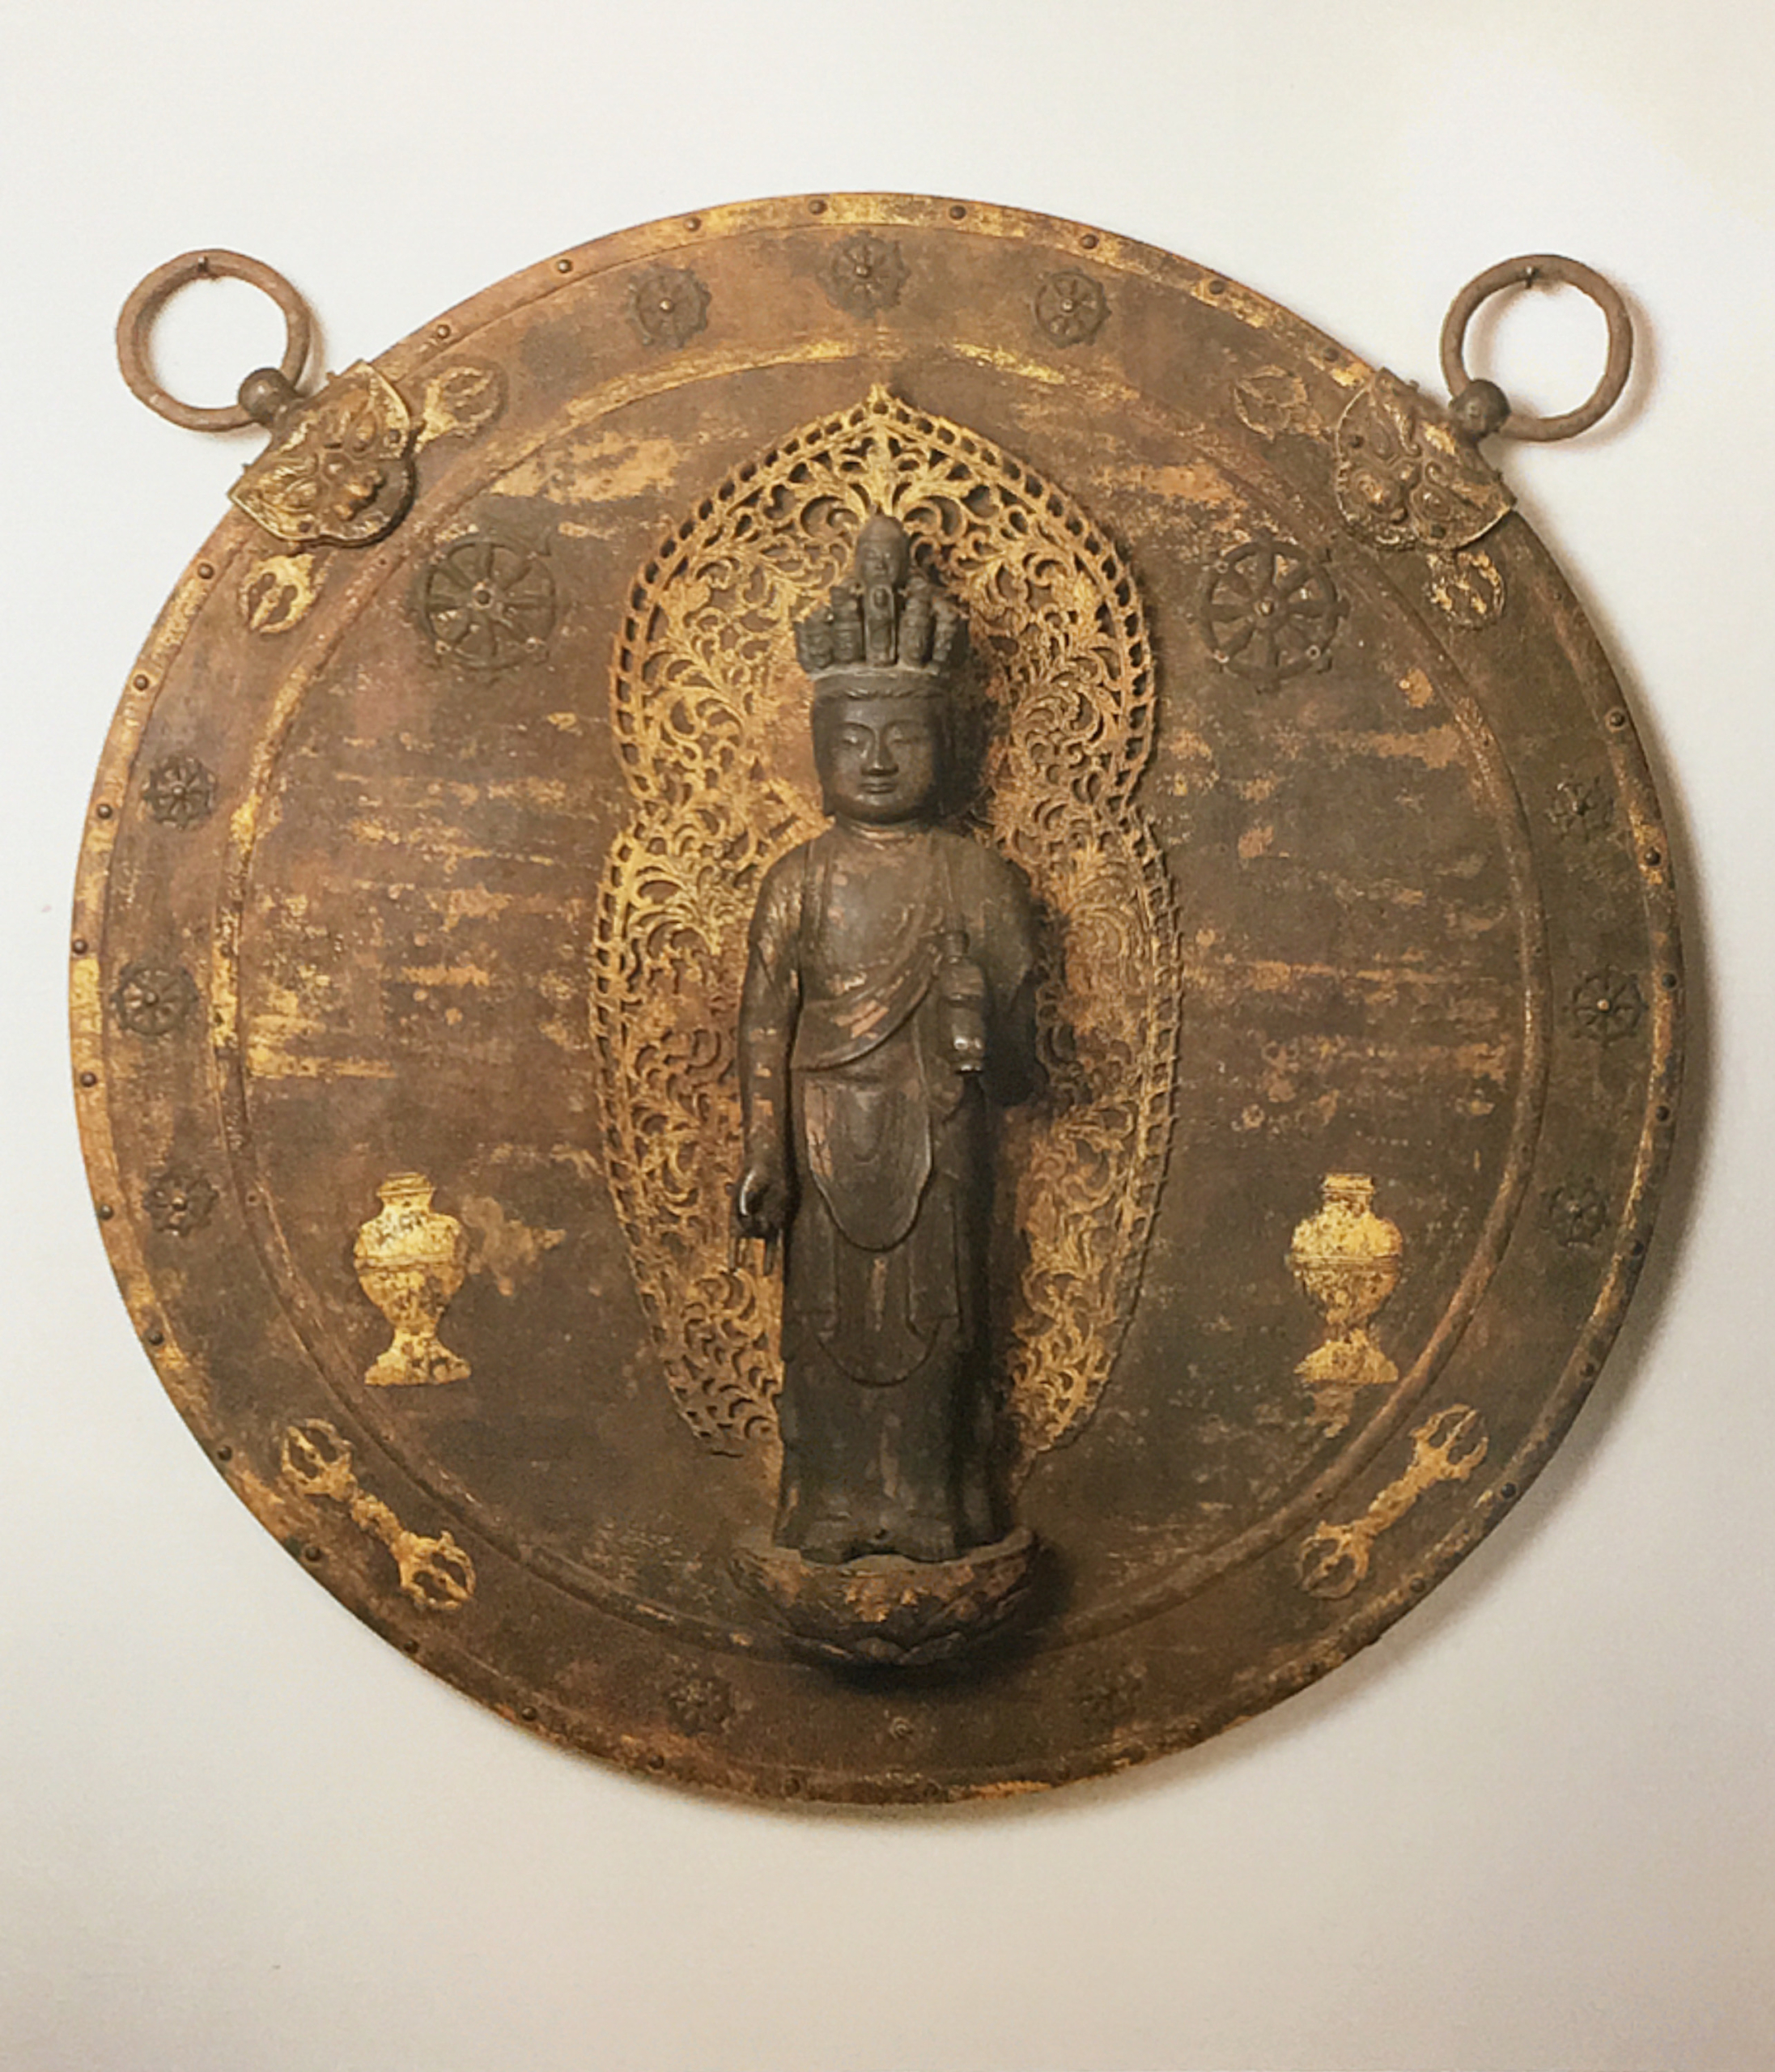 古美術 仏教美術 | 買取品目 | 福岡の絵画・美術品高価買取なら美術品